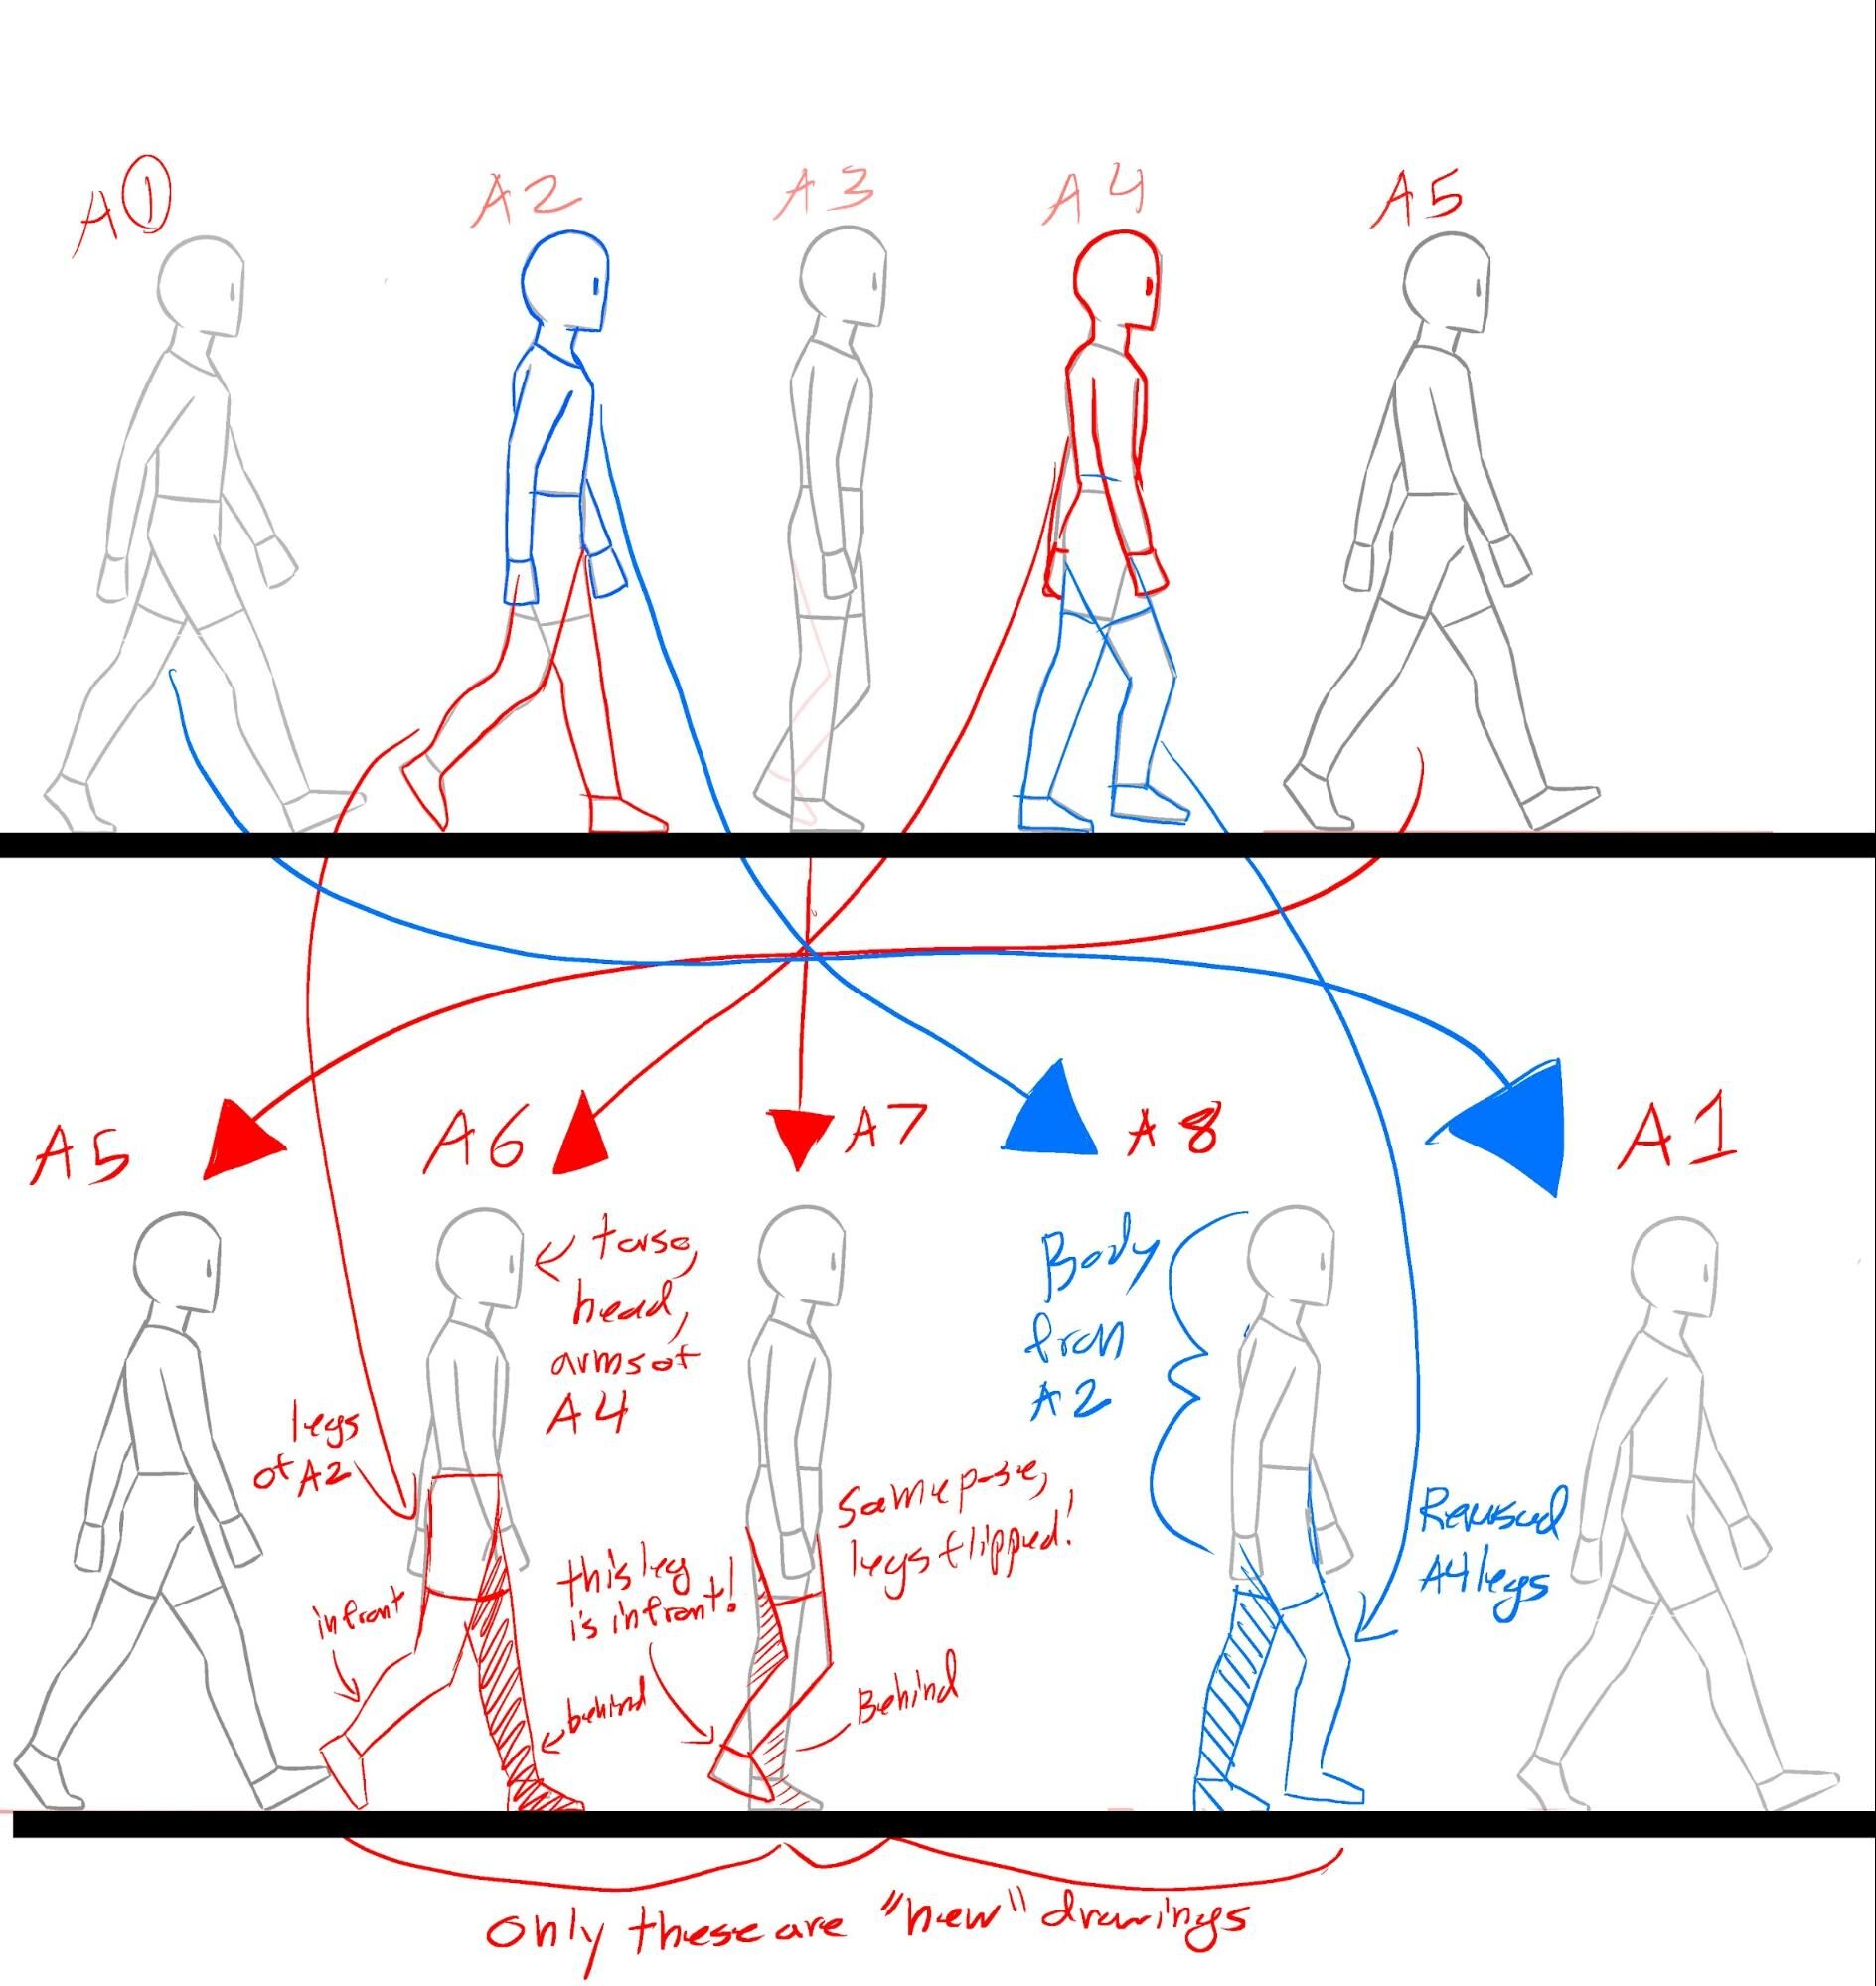 Walk Cycle Animation Blueprint: A how to tutorial | Rusty Animator